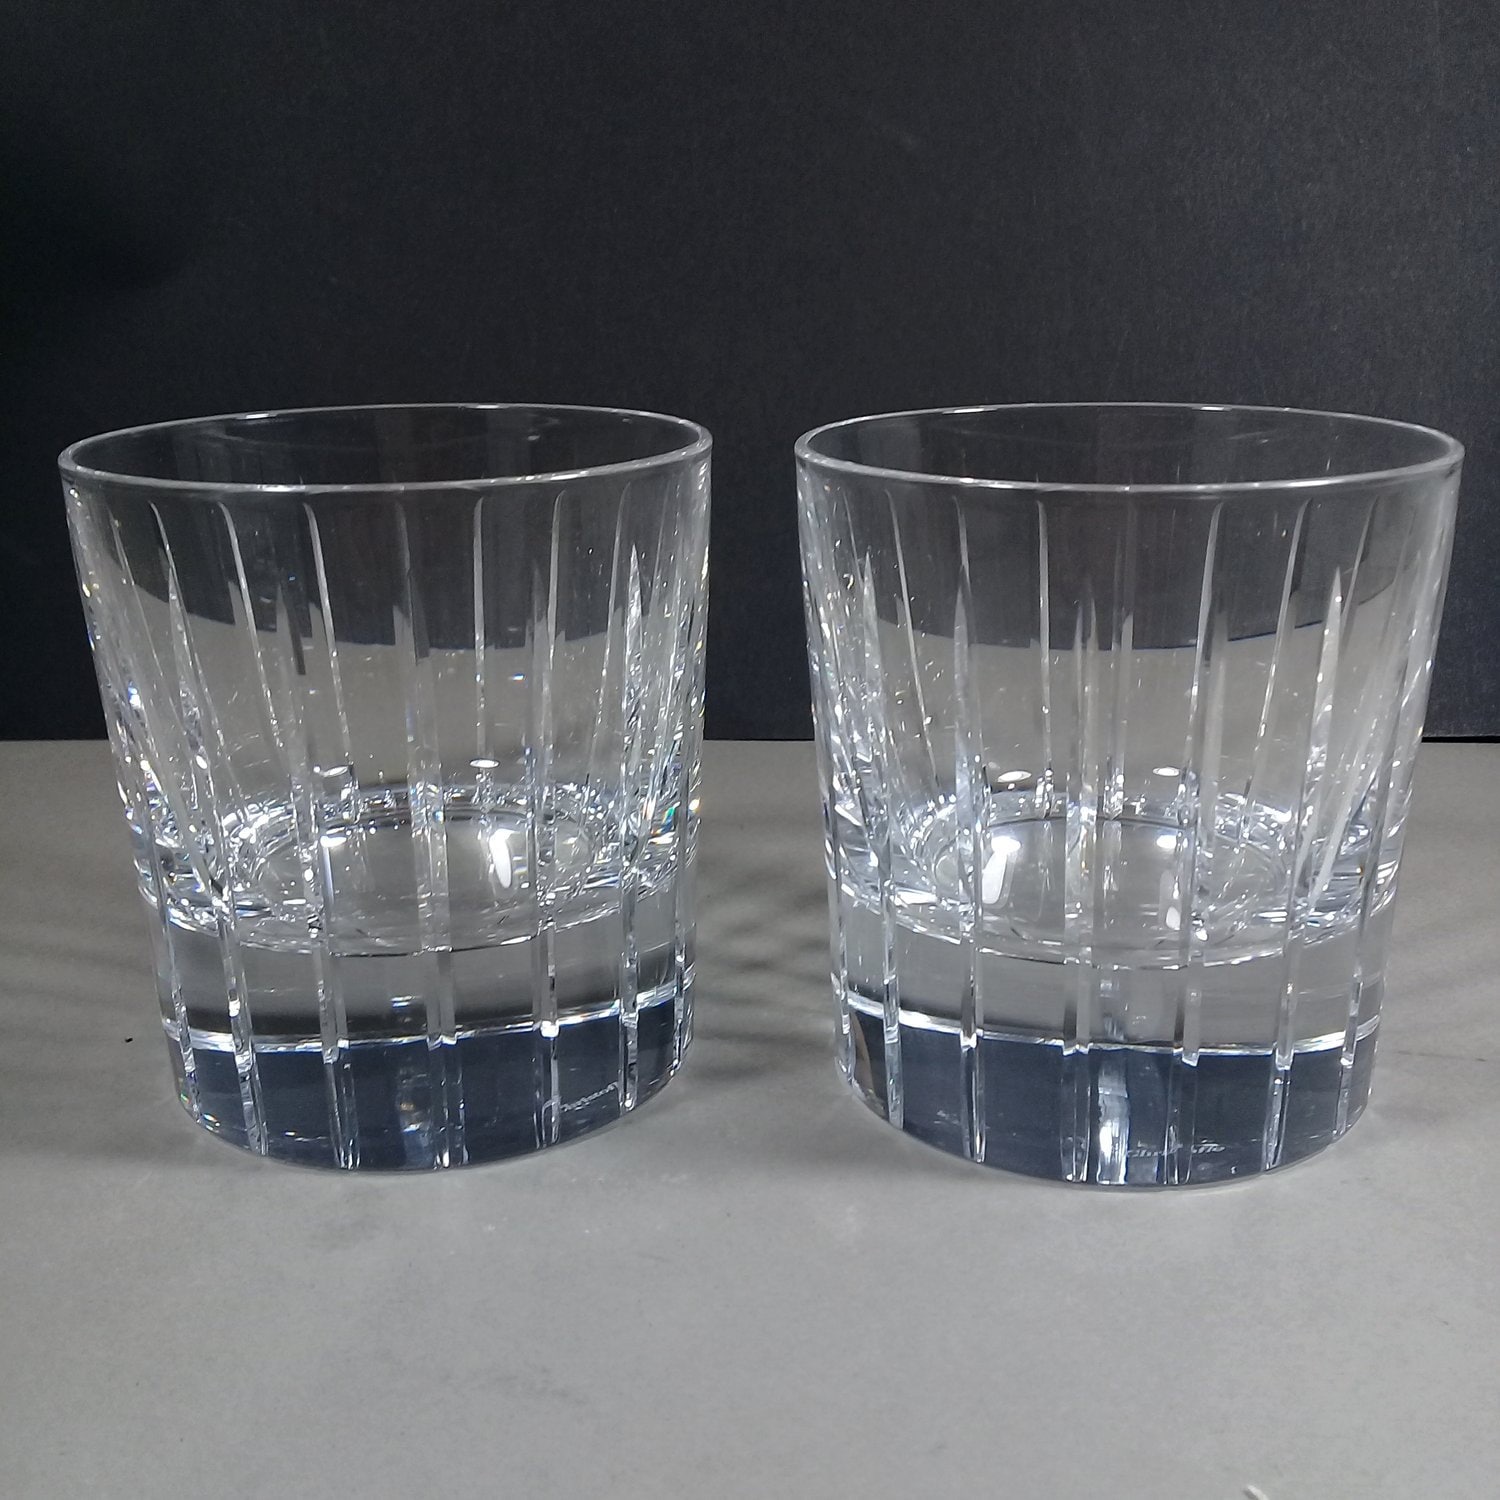 Christofle Iriana Crystal Old Fashioned Glasses, Set of 2